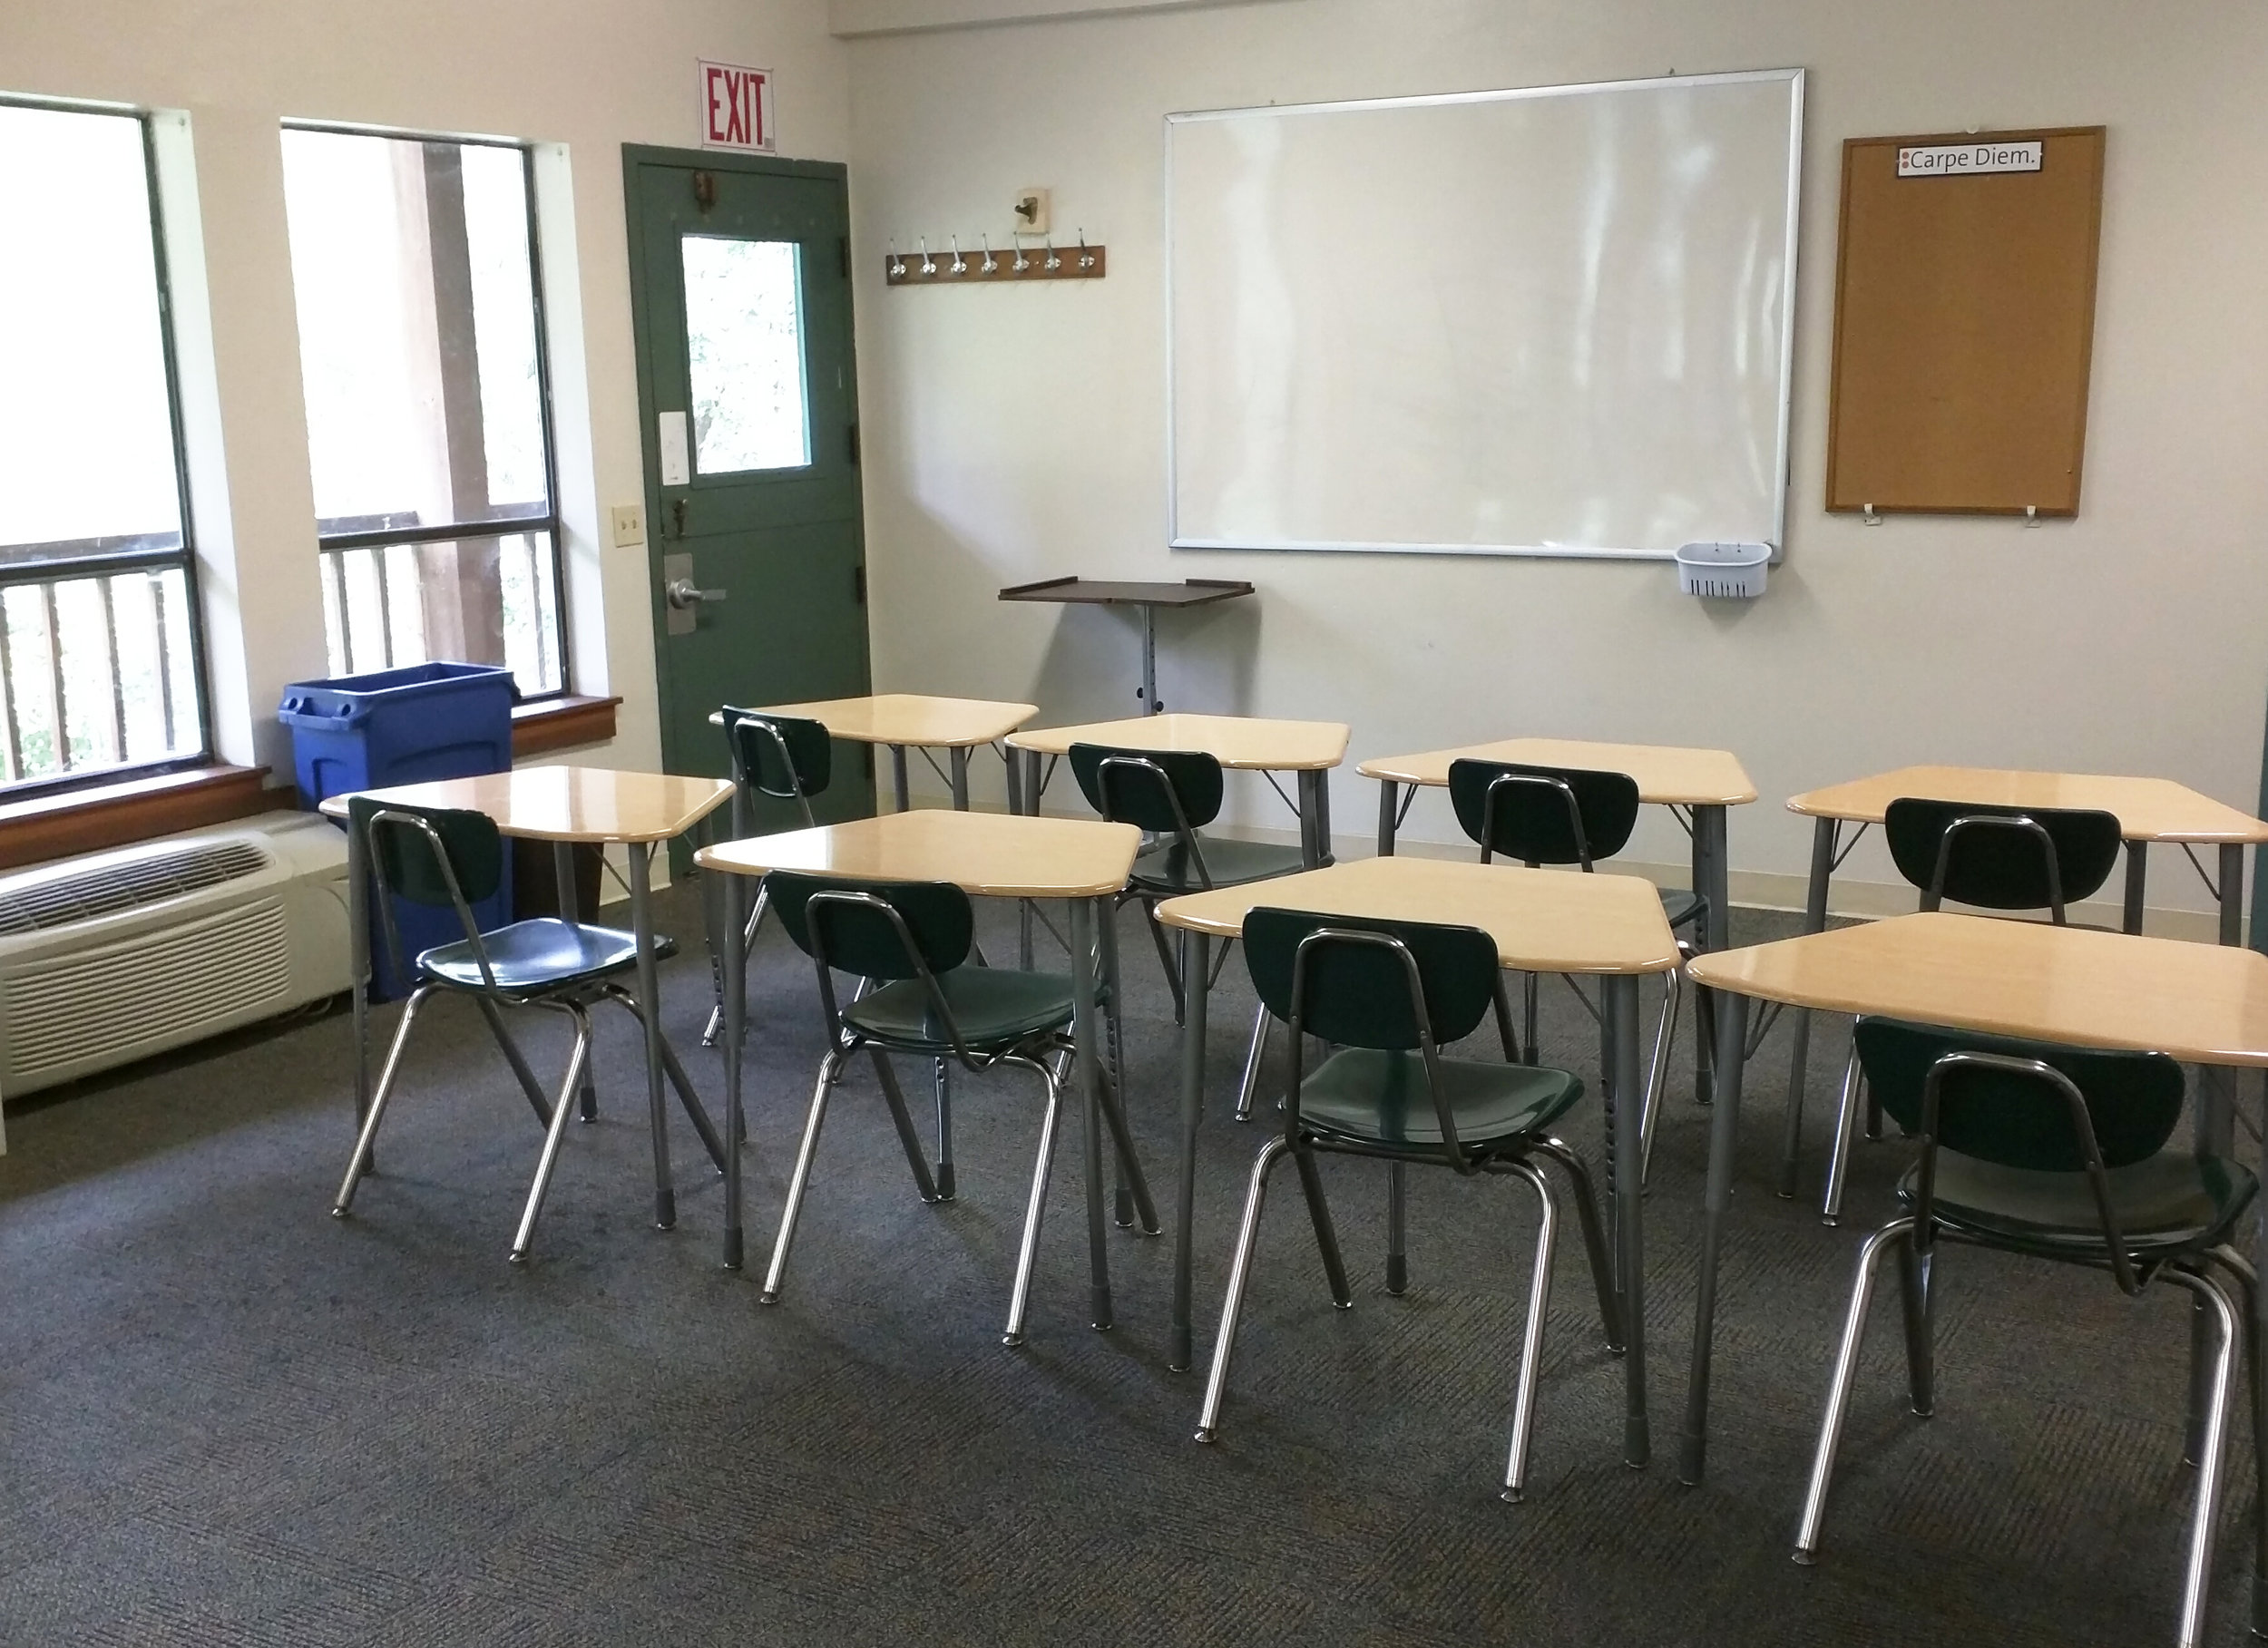 Sample classroom 2017 cropped.jpg